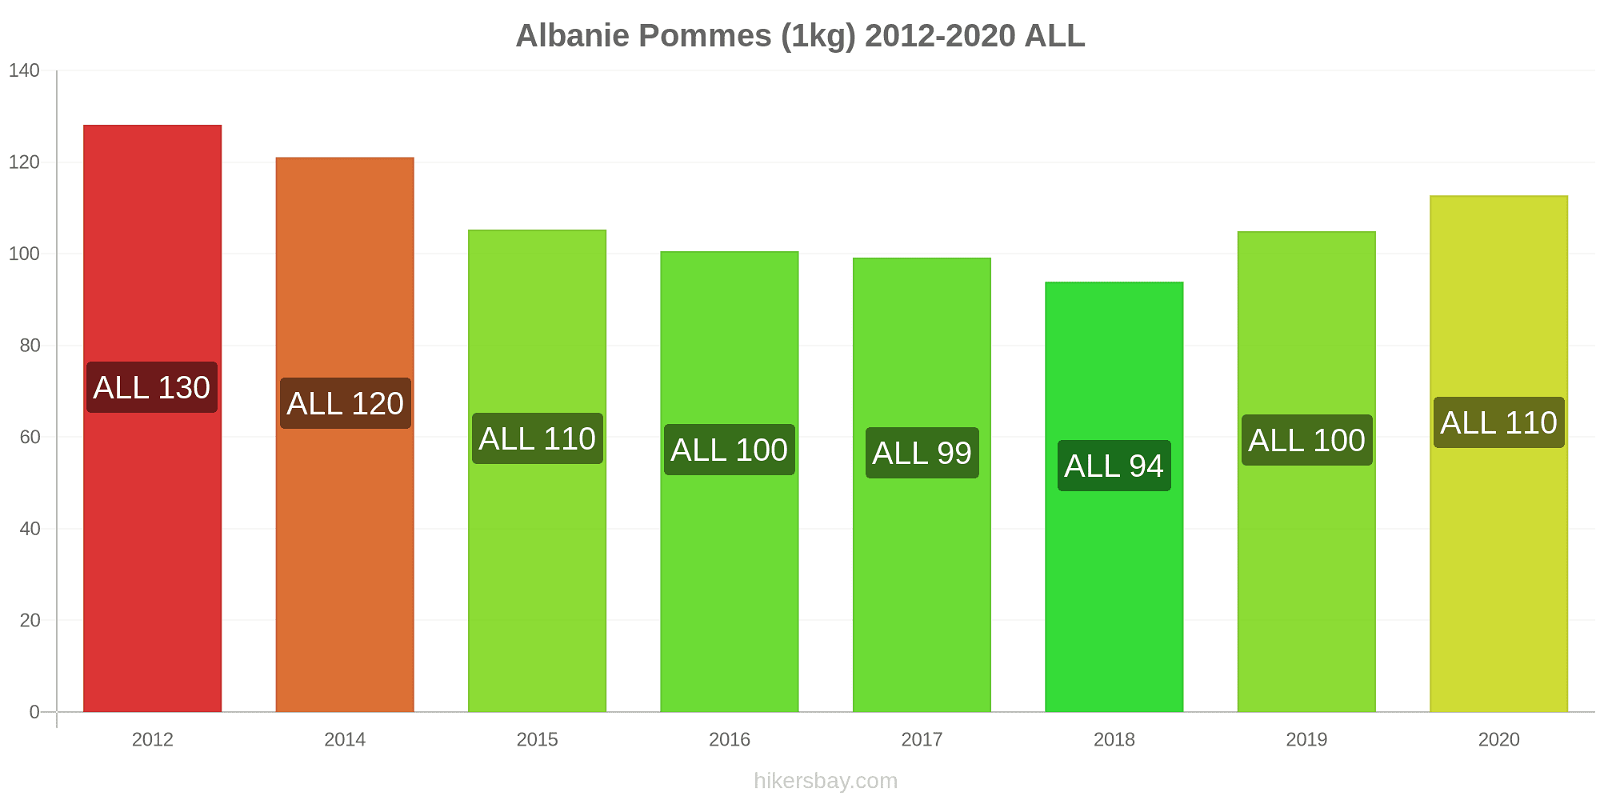 Albanie changements de prix Pommes (1kg) hikersbay.com